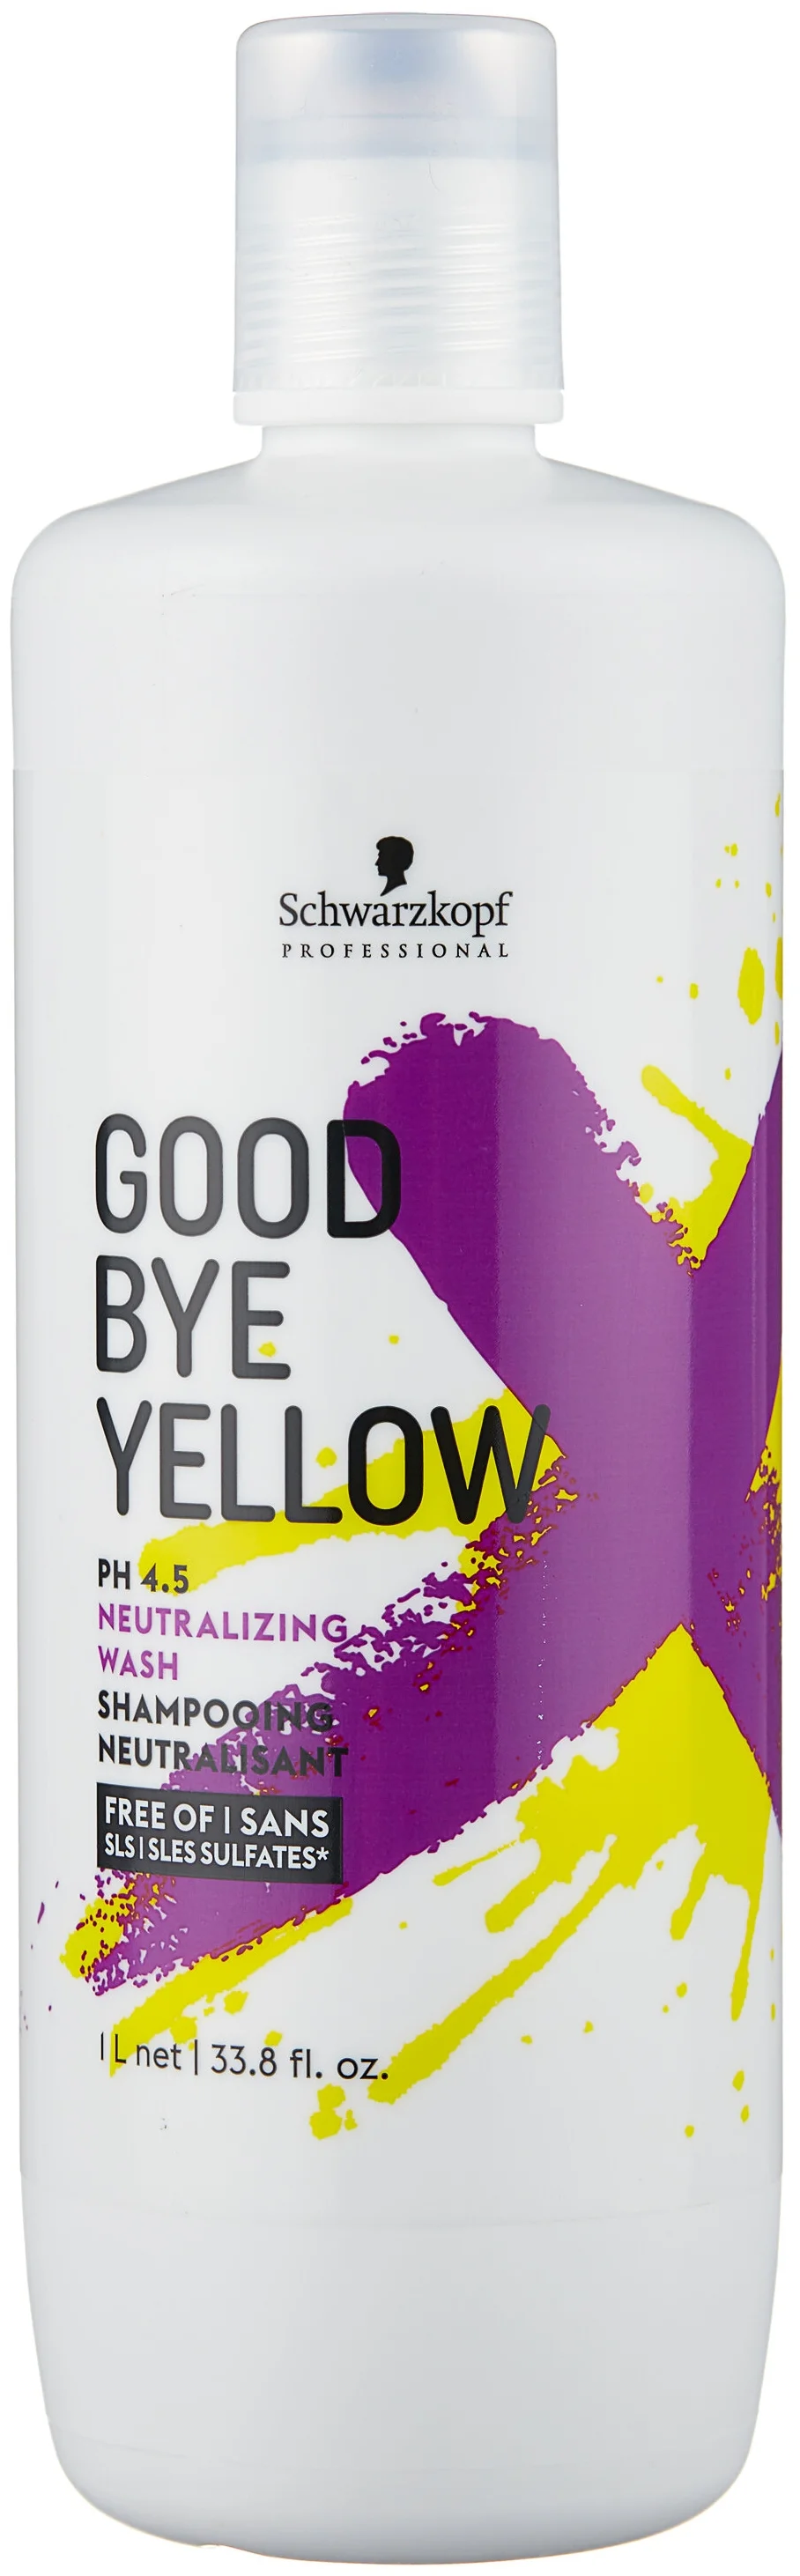 Schwarzkopf Professional Goodbye Yellow Neutralizing Wash - уровень pH 4.5